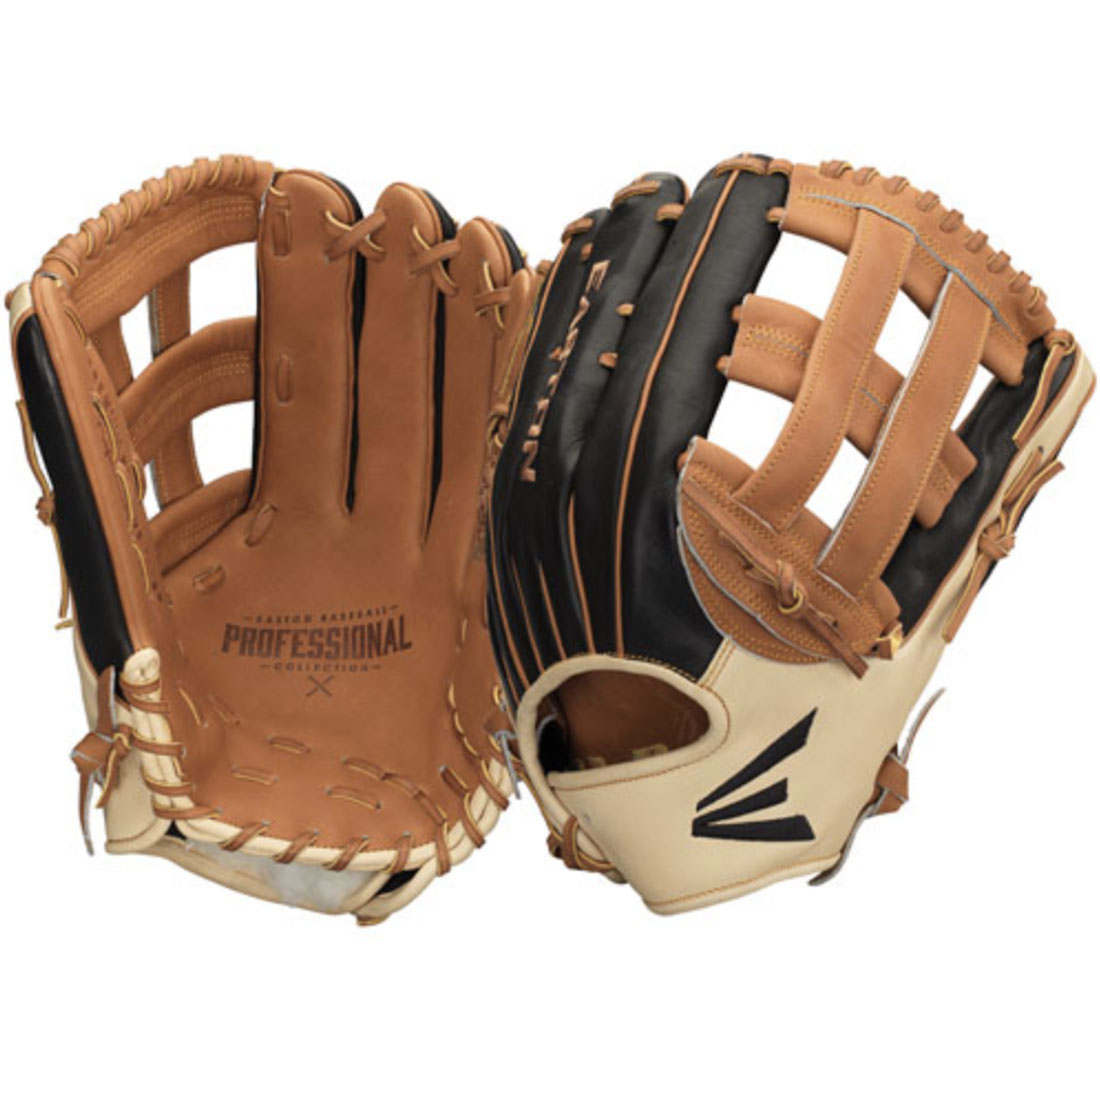 Easton Pro Collection Baseball Glove 12.75\" PCHF73